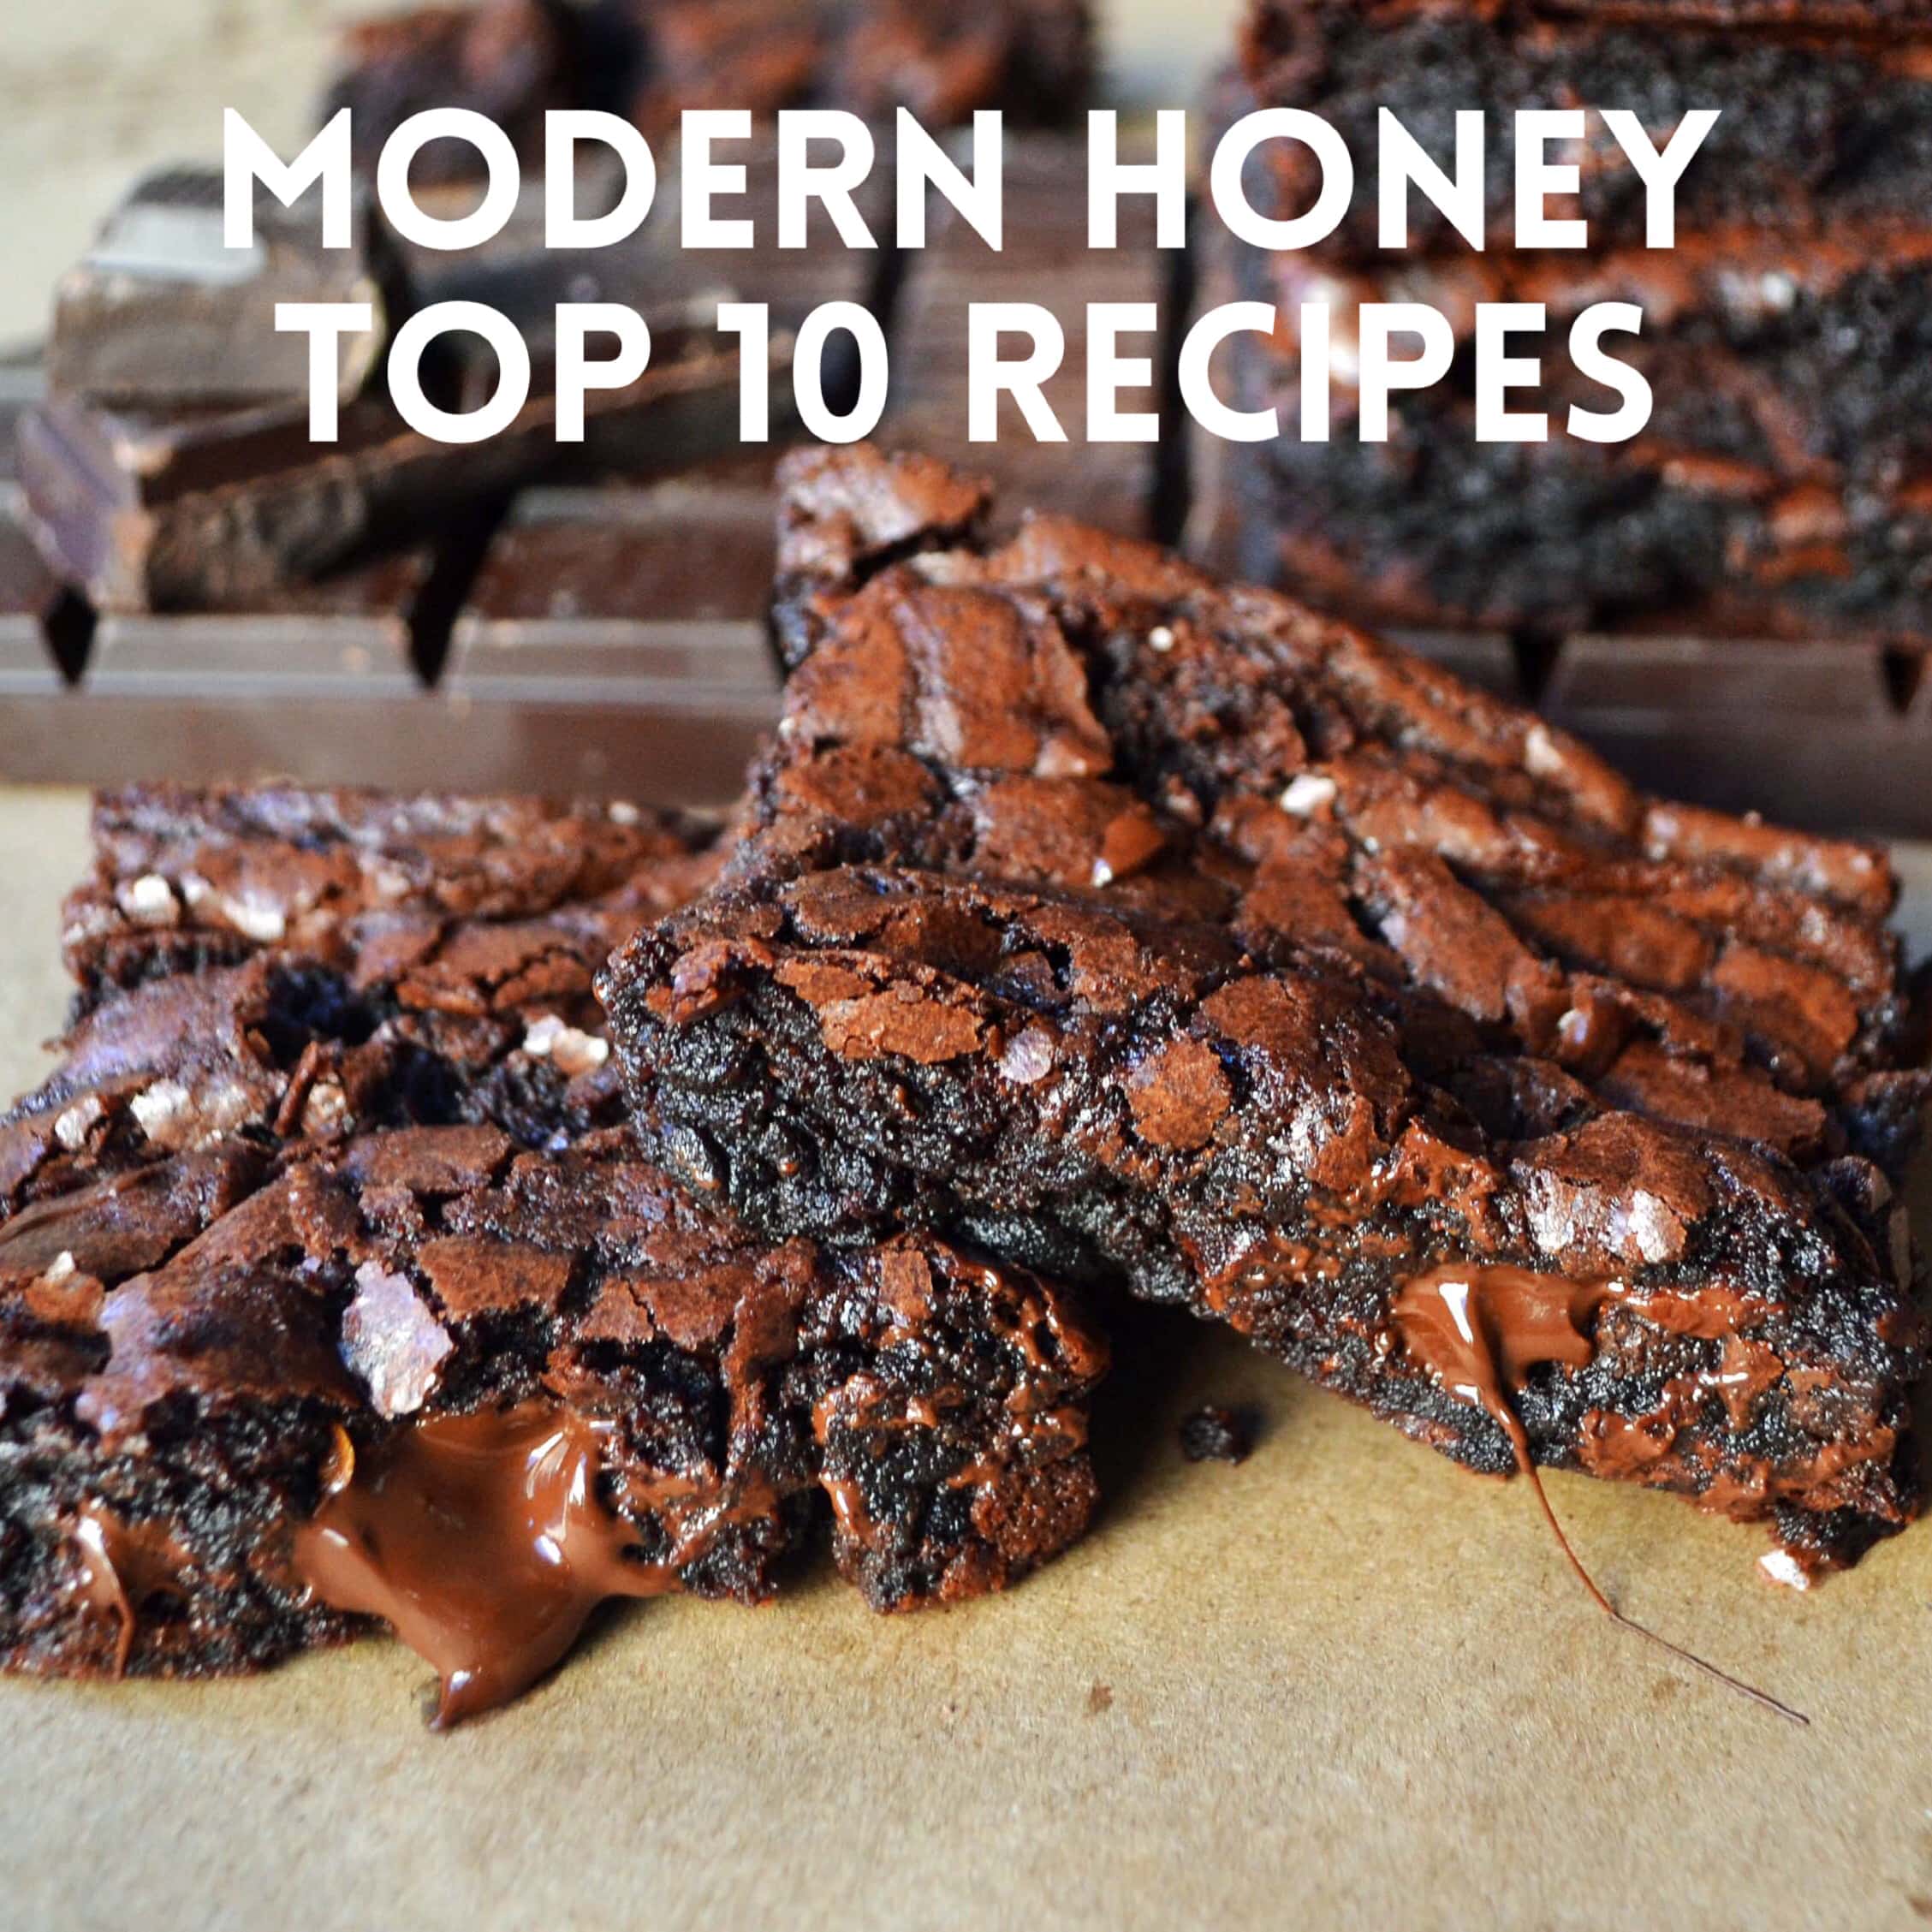 Modern Honey Top 10 Most Popular Recipes. www.modernhoney.com